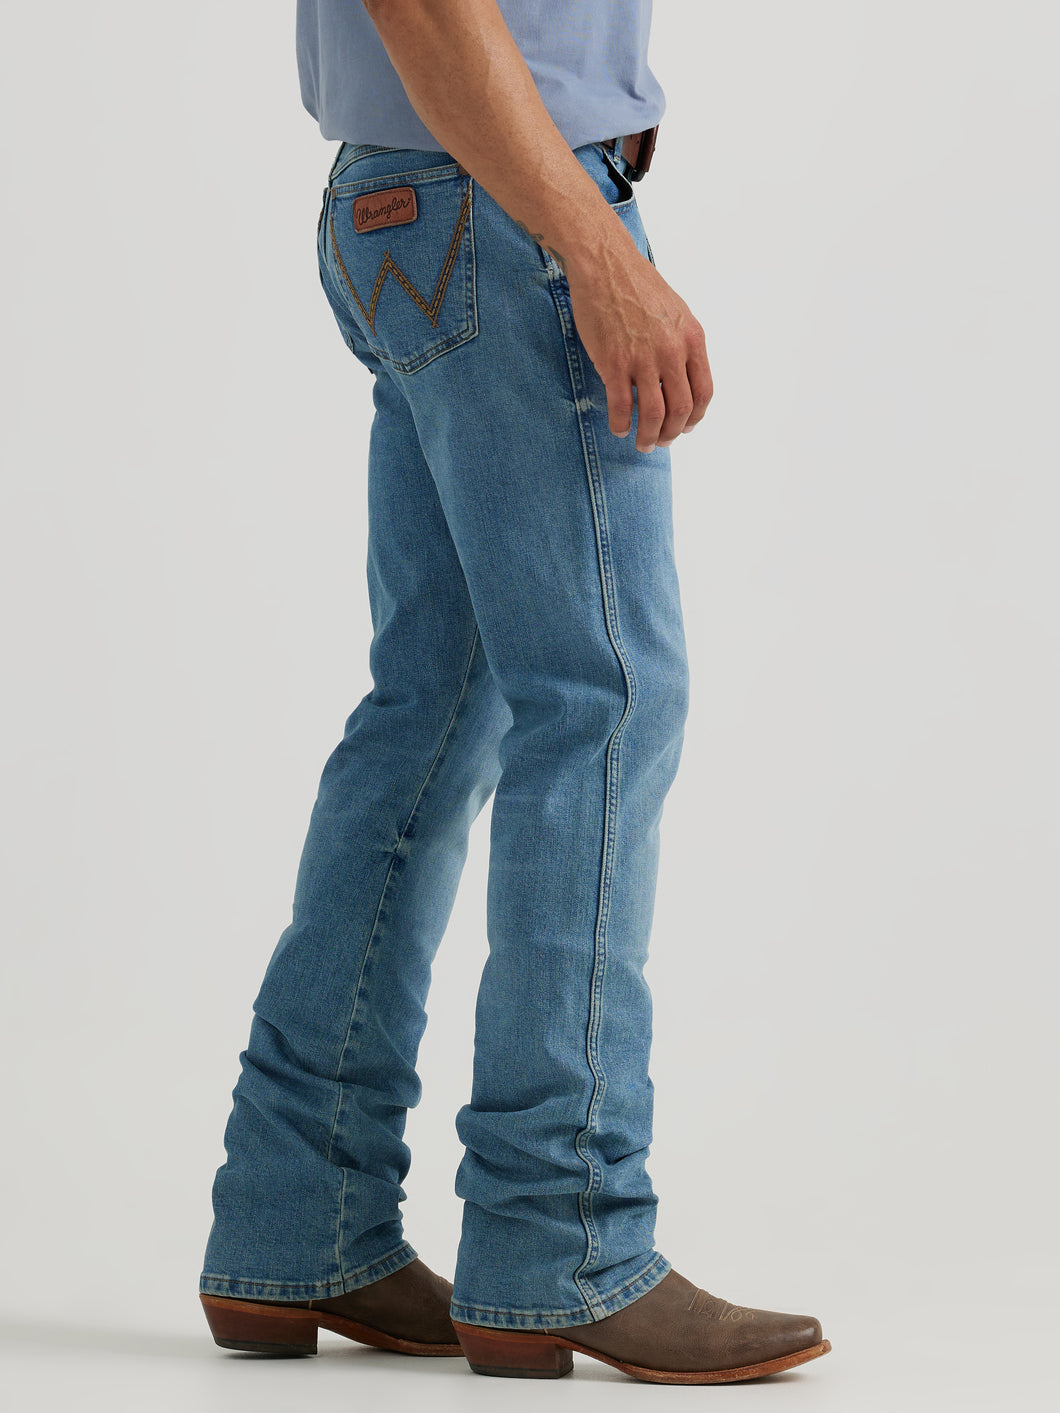 Pard's Western Shop Men's Wrangler Retro Slim Fit Bootcut Jean in Light Stonewash Flintlock